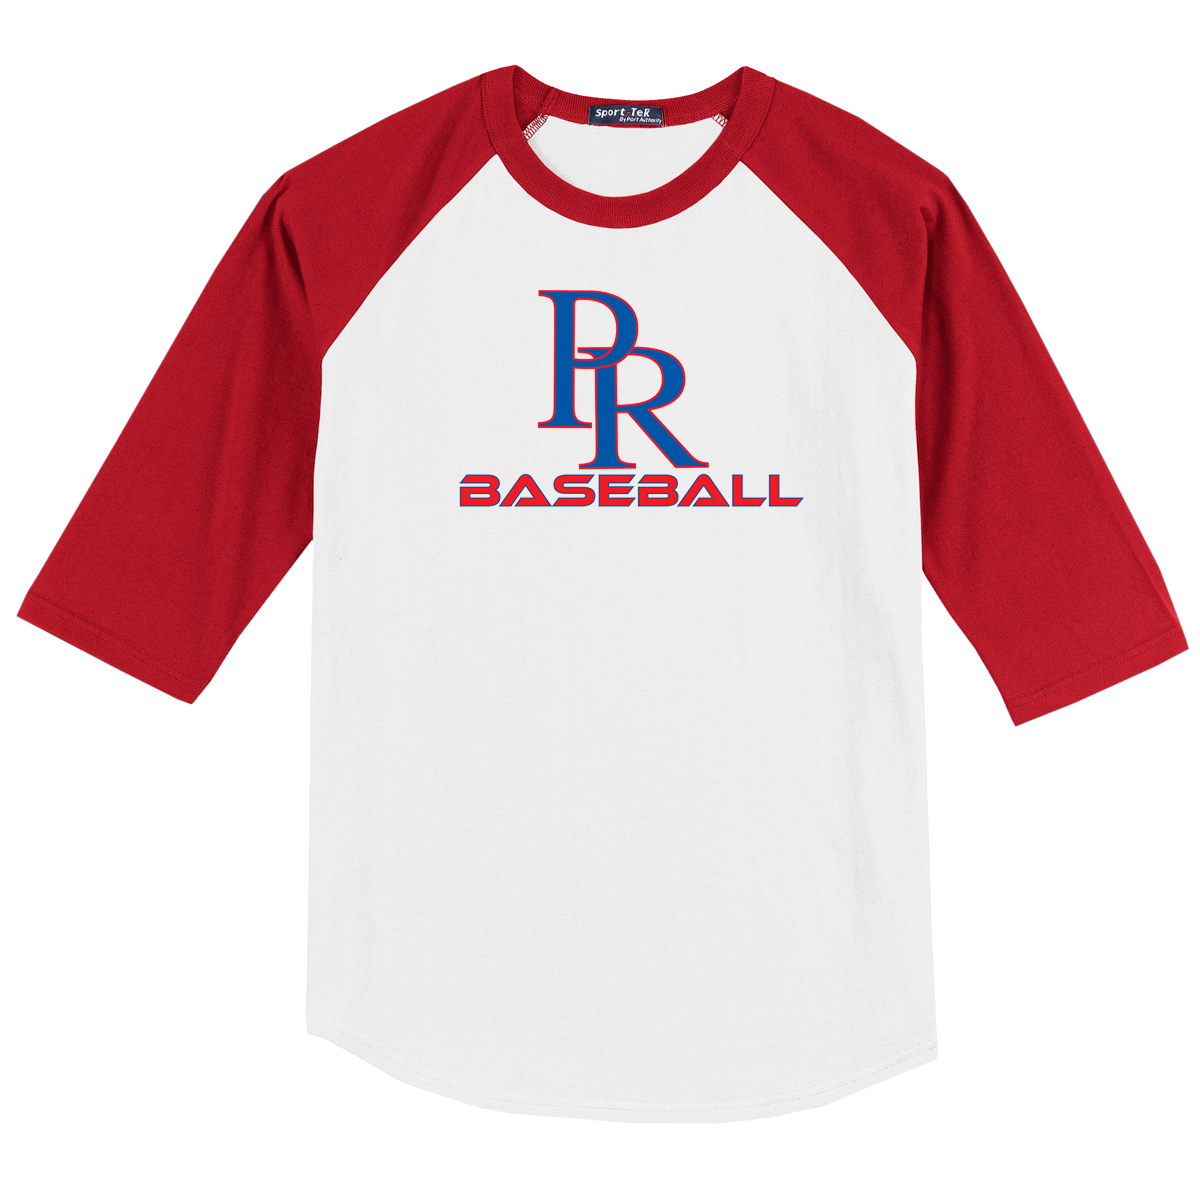 PR Baseball 3/4 Sleeve Baseball Shirt